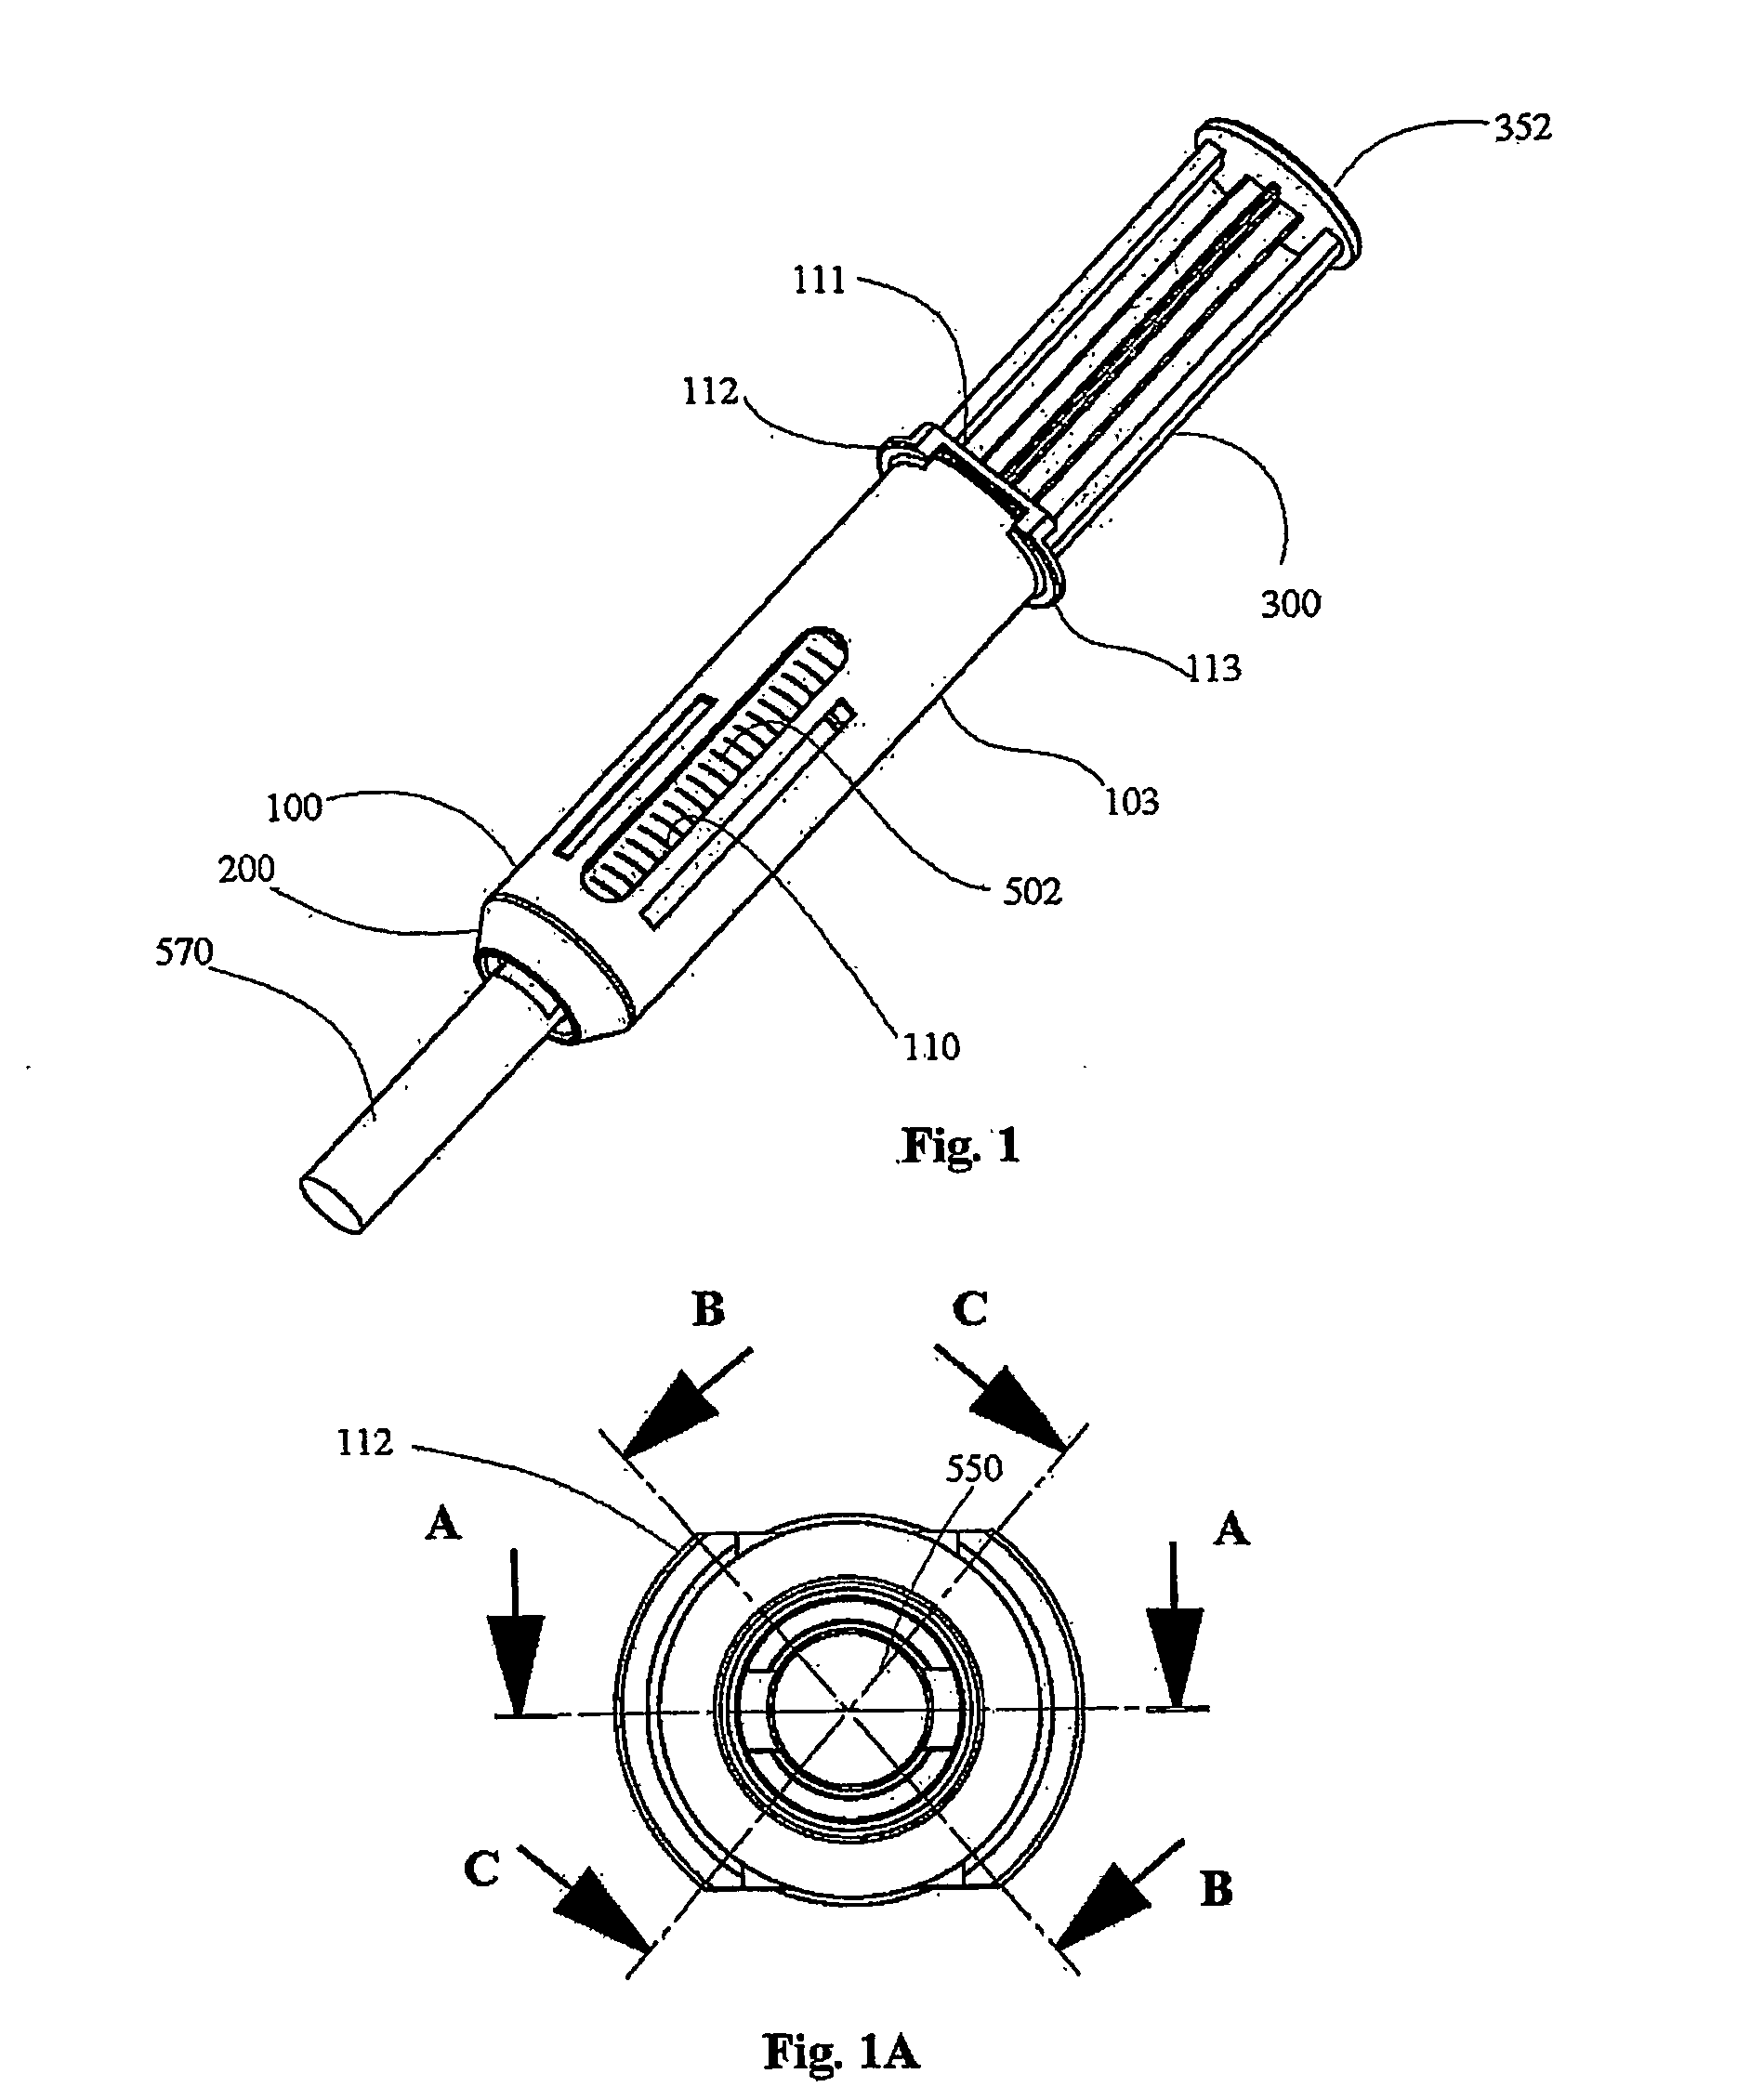 Syringe with automatically triggered safety sleeve